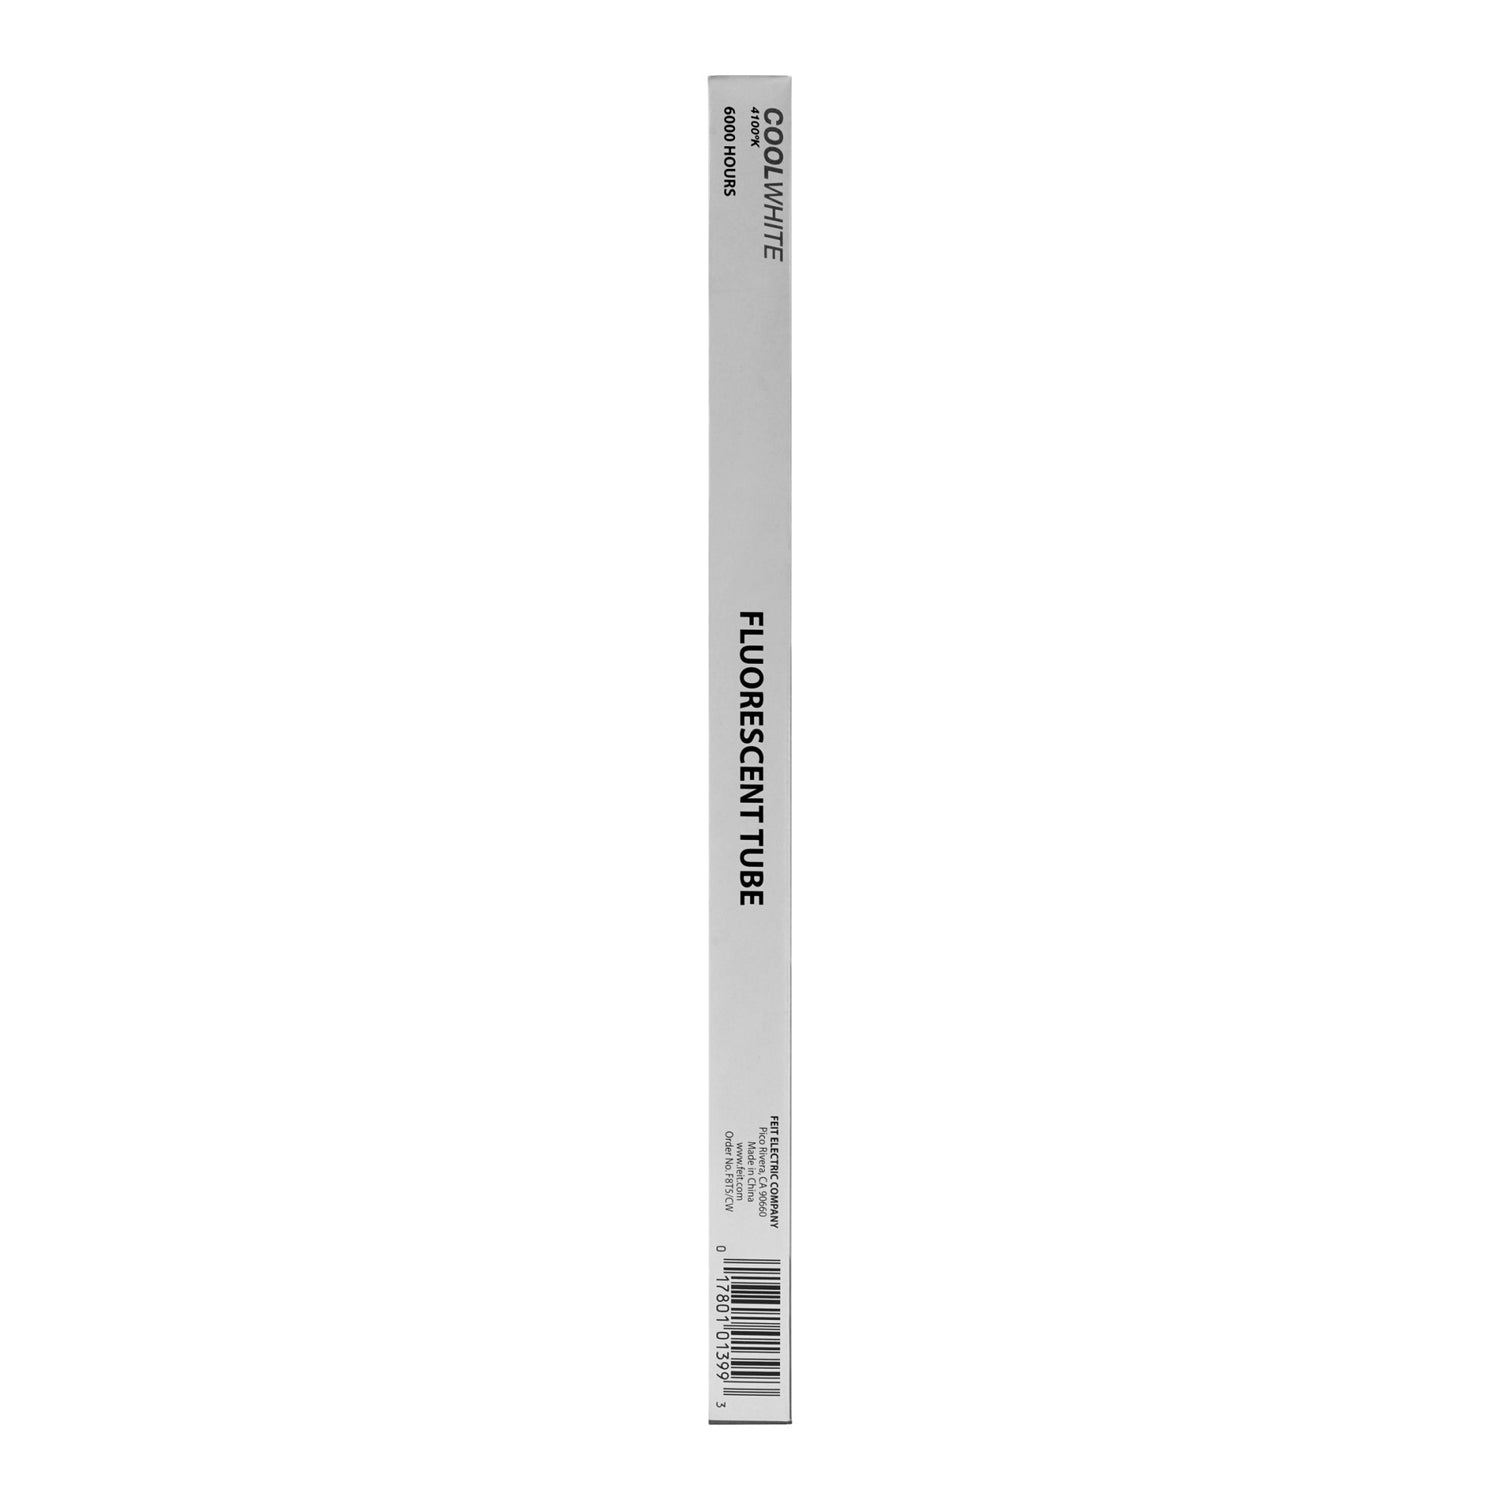 12 in. 8W Cool White (4100K) Mini Bi-Pin Base (T5 Replacement) Fluorescent Linear Light Tube